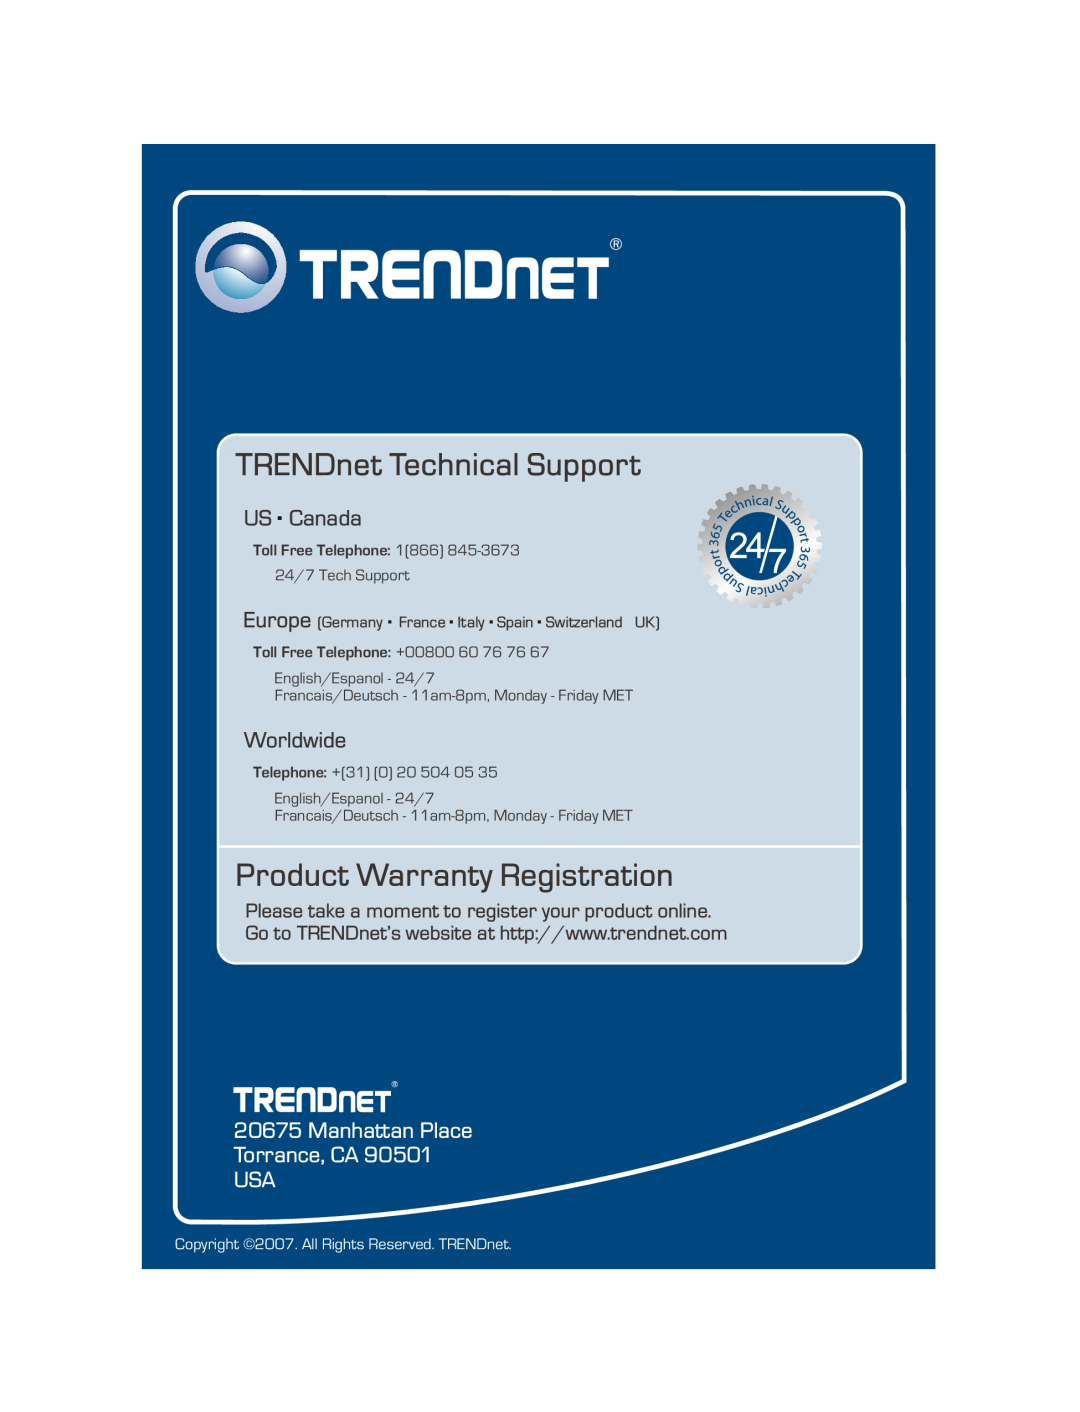 TRENDnet TK-407K Manhattan Place Torrance, CA USA, TRENDnet Technical Support, Product Warranty Registration, US . Canada 